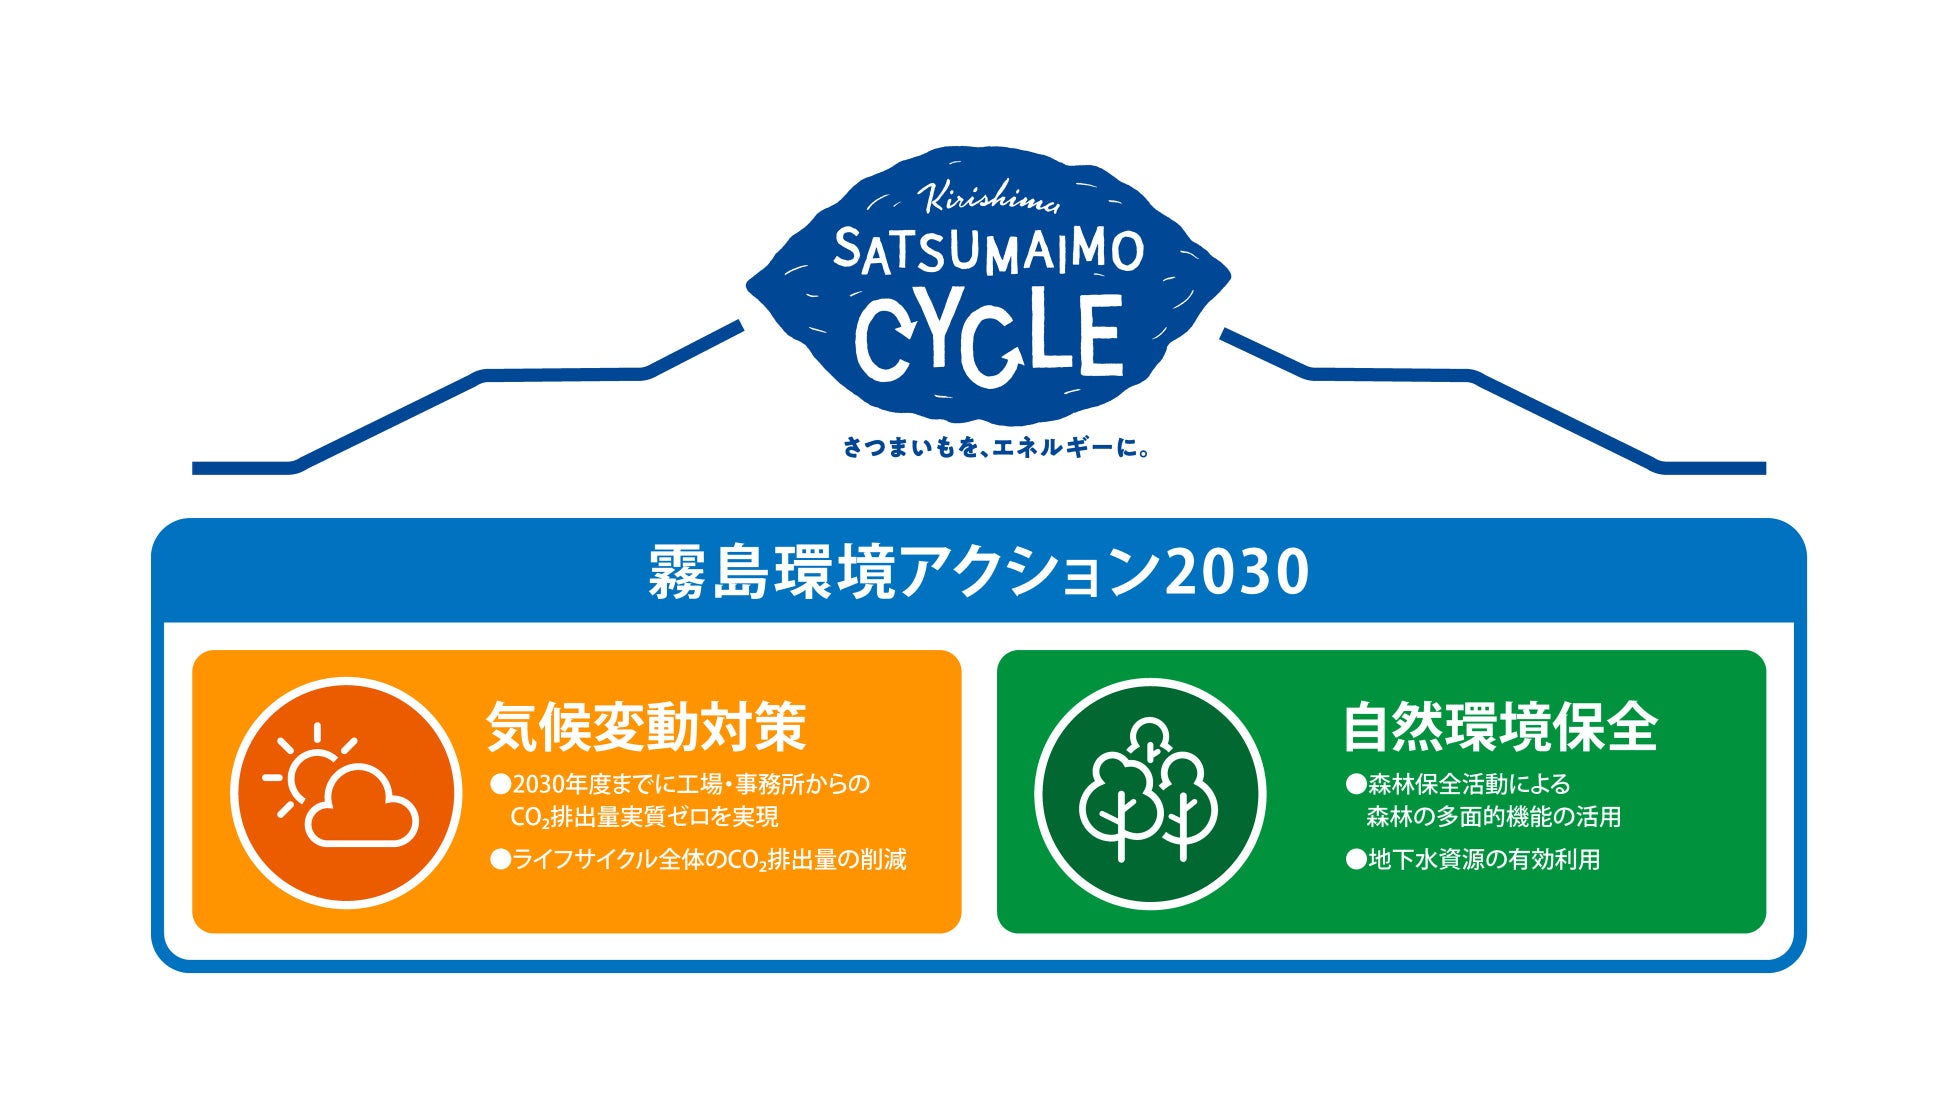 『KIRISHIMA SATSUMAIMO CYCLE～さつまいもを、エネルギーに。～』の実現に向けて『霧島環境アクション2030』を策定のサブ画像1